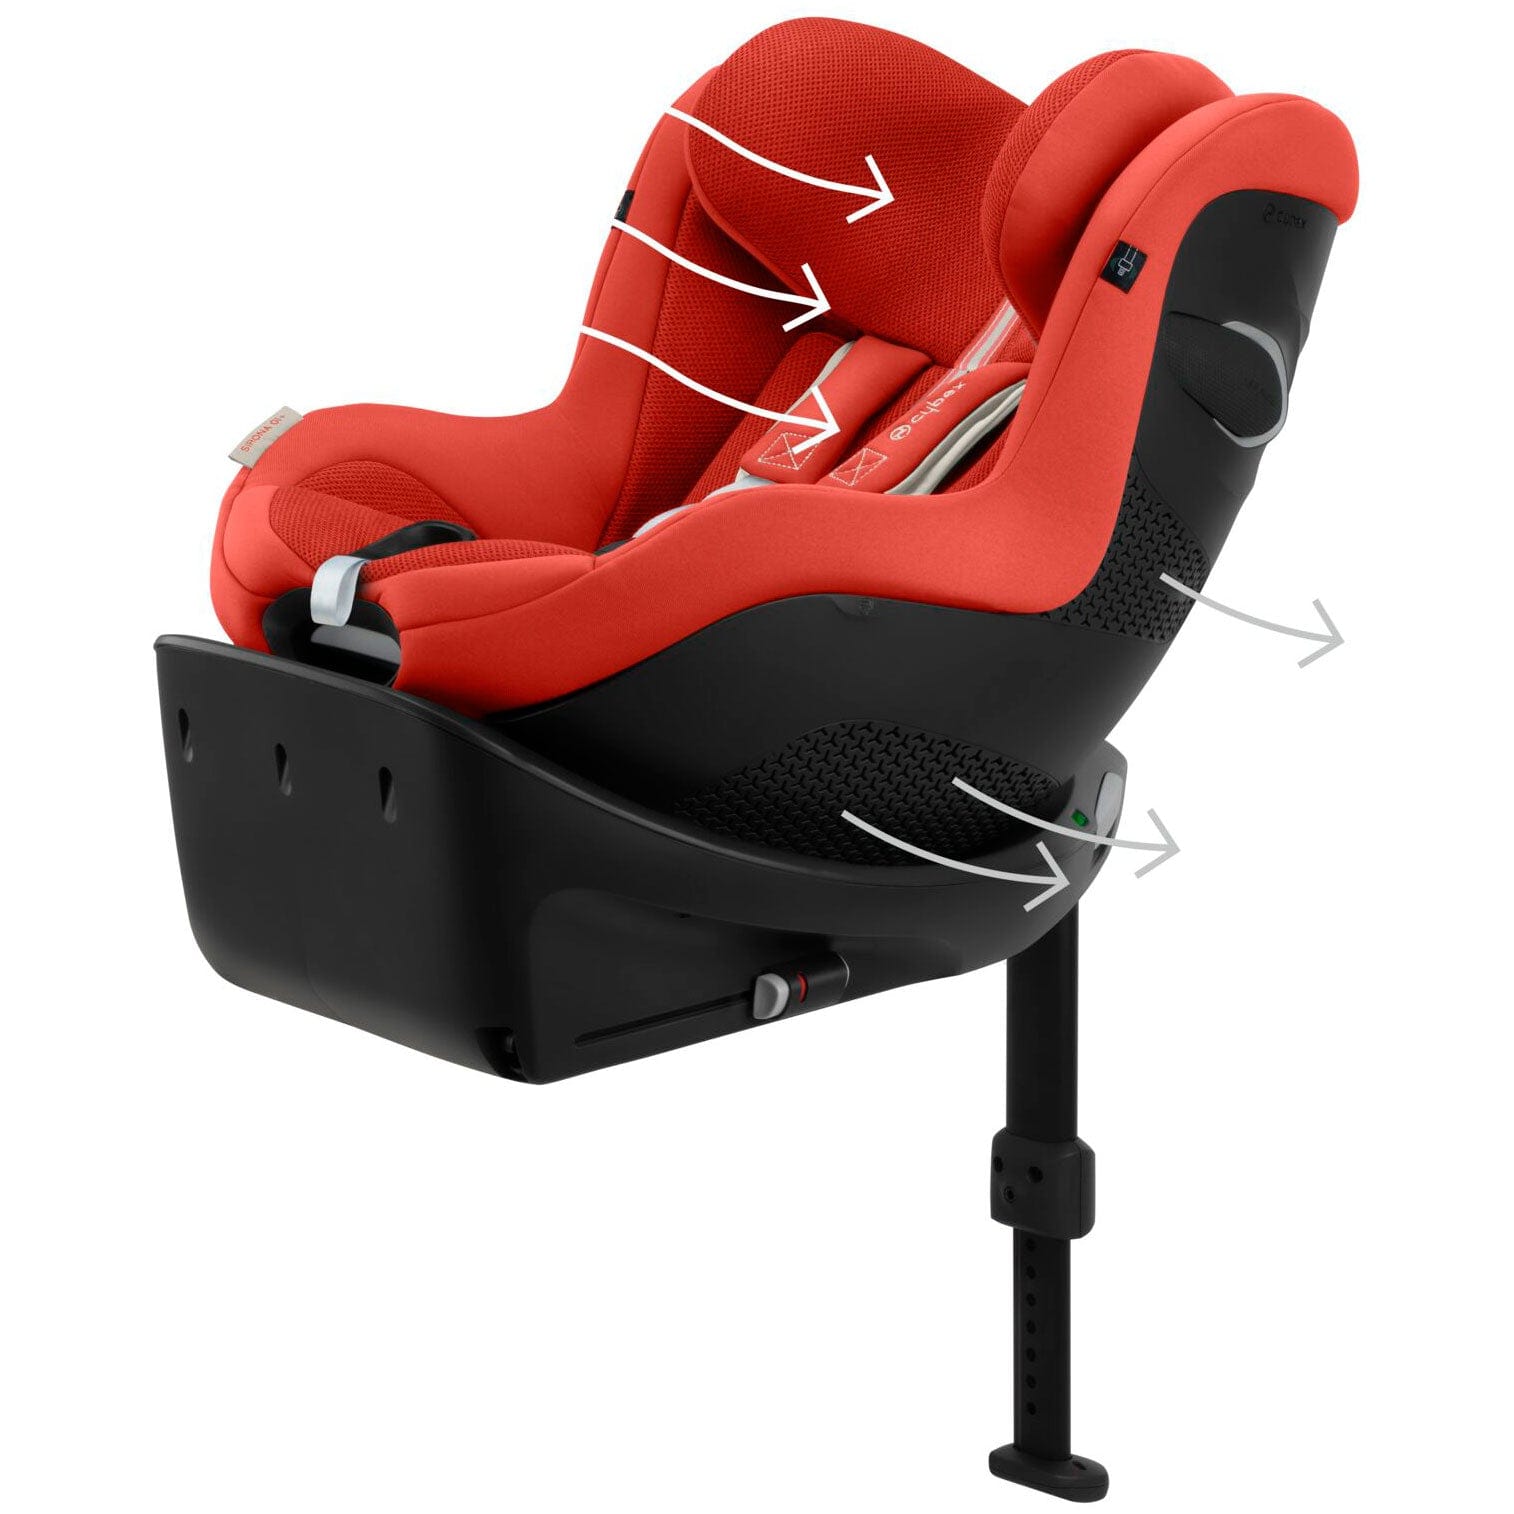 Cybex i-Size car seats Cybex Sirona Gi i-Size Plus - Hibiscus Red 522001685